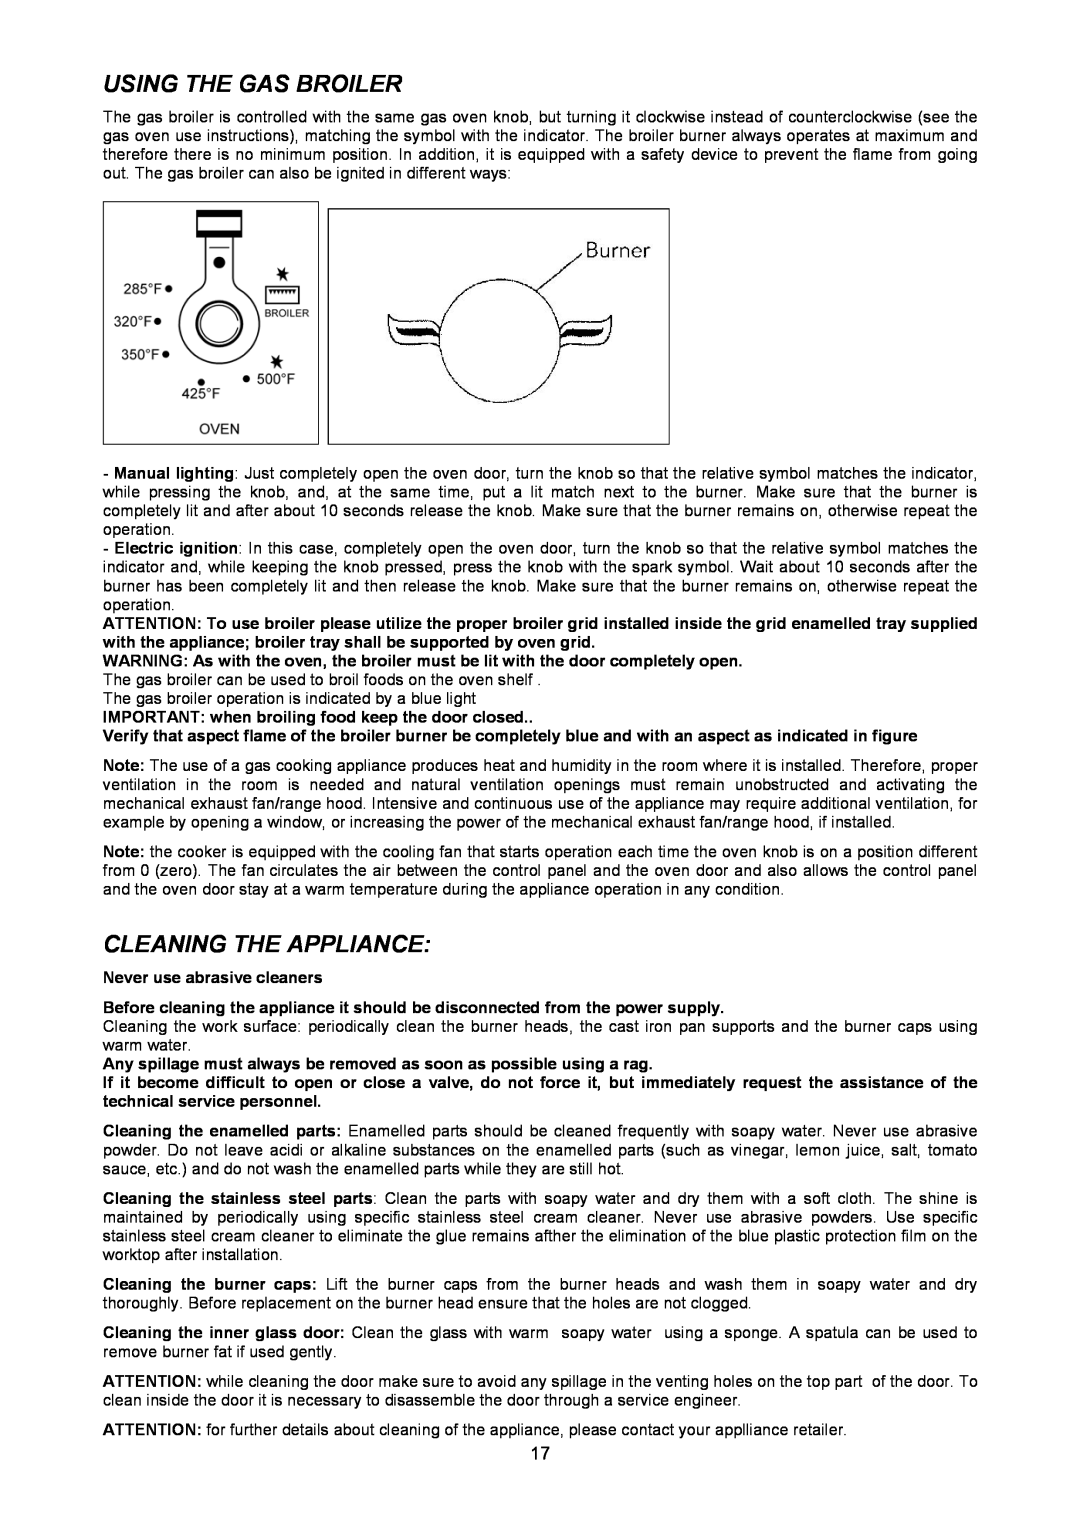 Bertazzoni X366GGVX (X36 6 00 X), X365GGVX (X36 5 00 X) manual Using The Gas Broiler, Cleaning The Appliance 